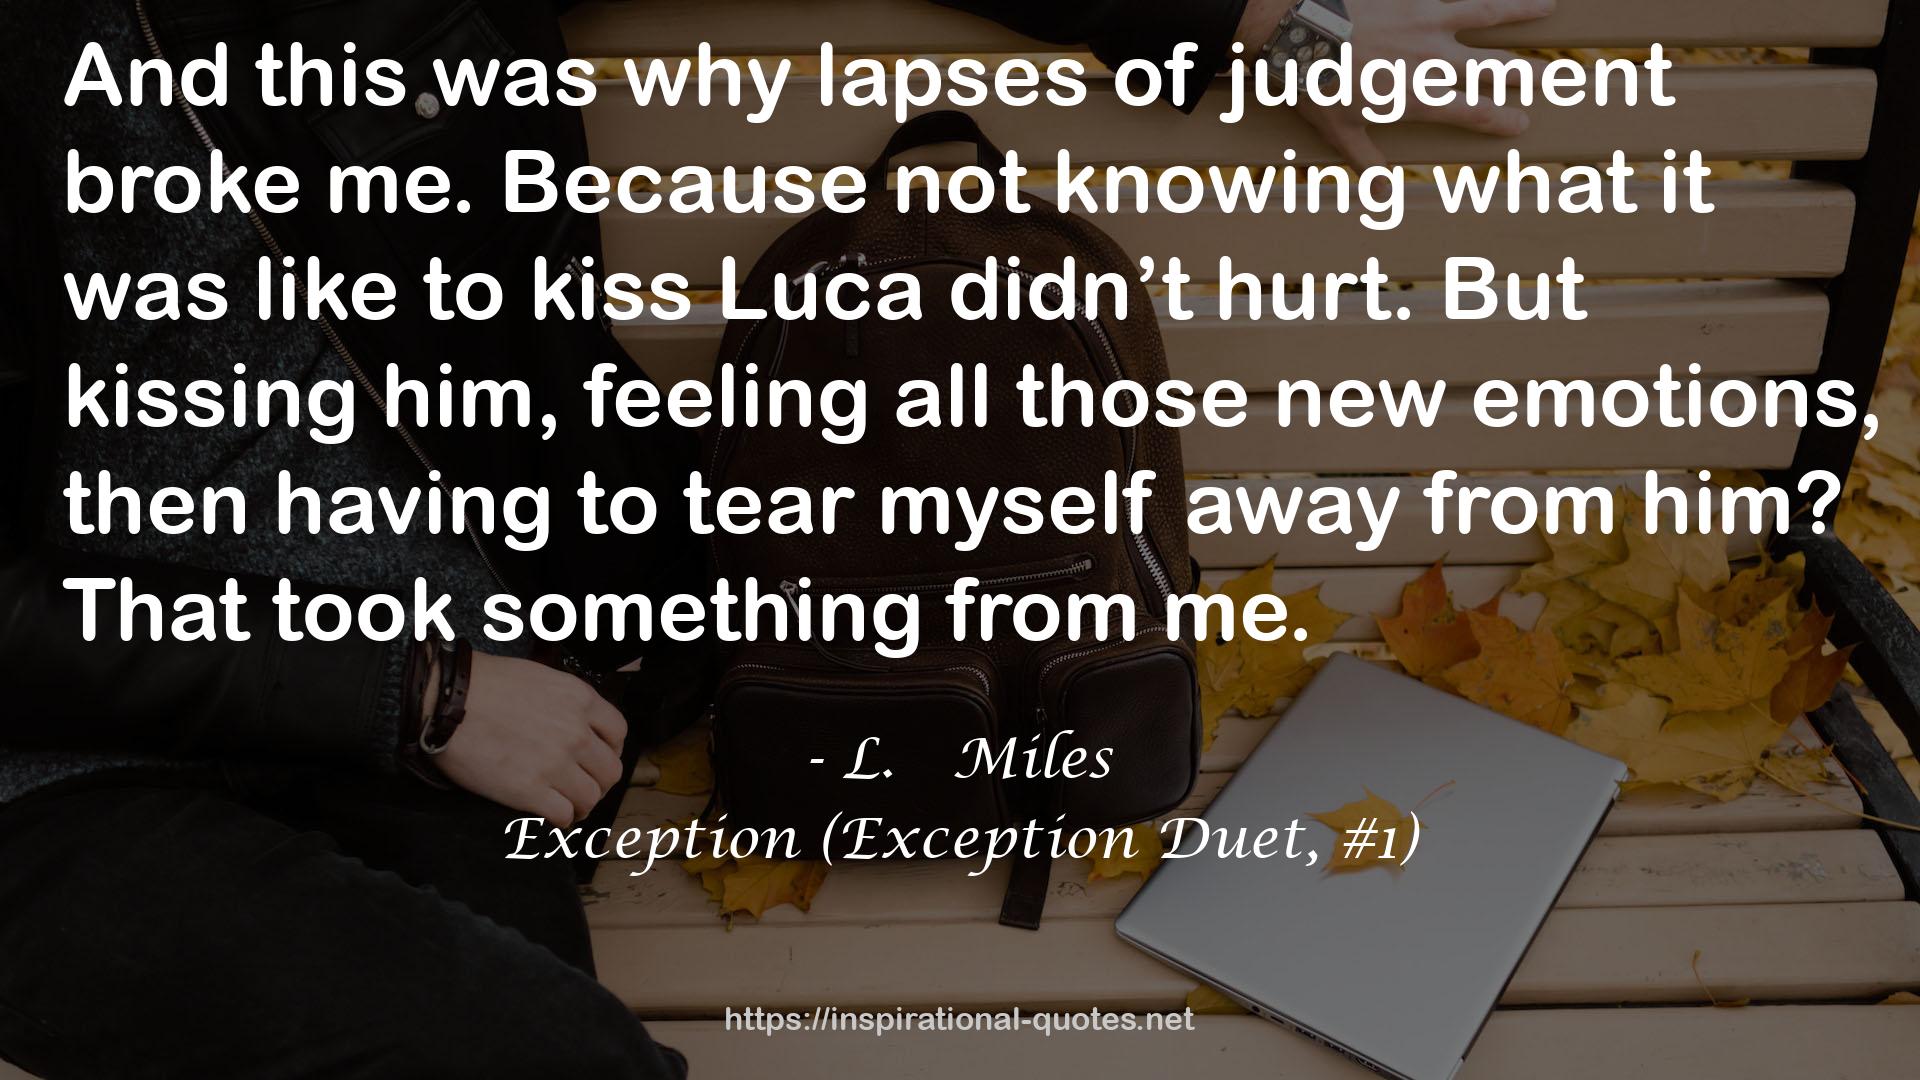 Exception (Exception Duet, #1) QUOTES